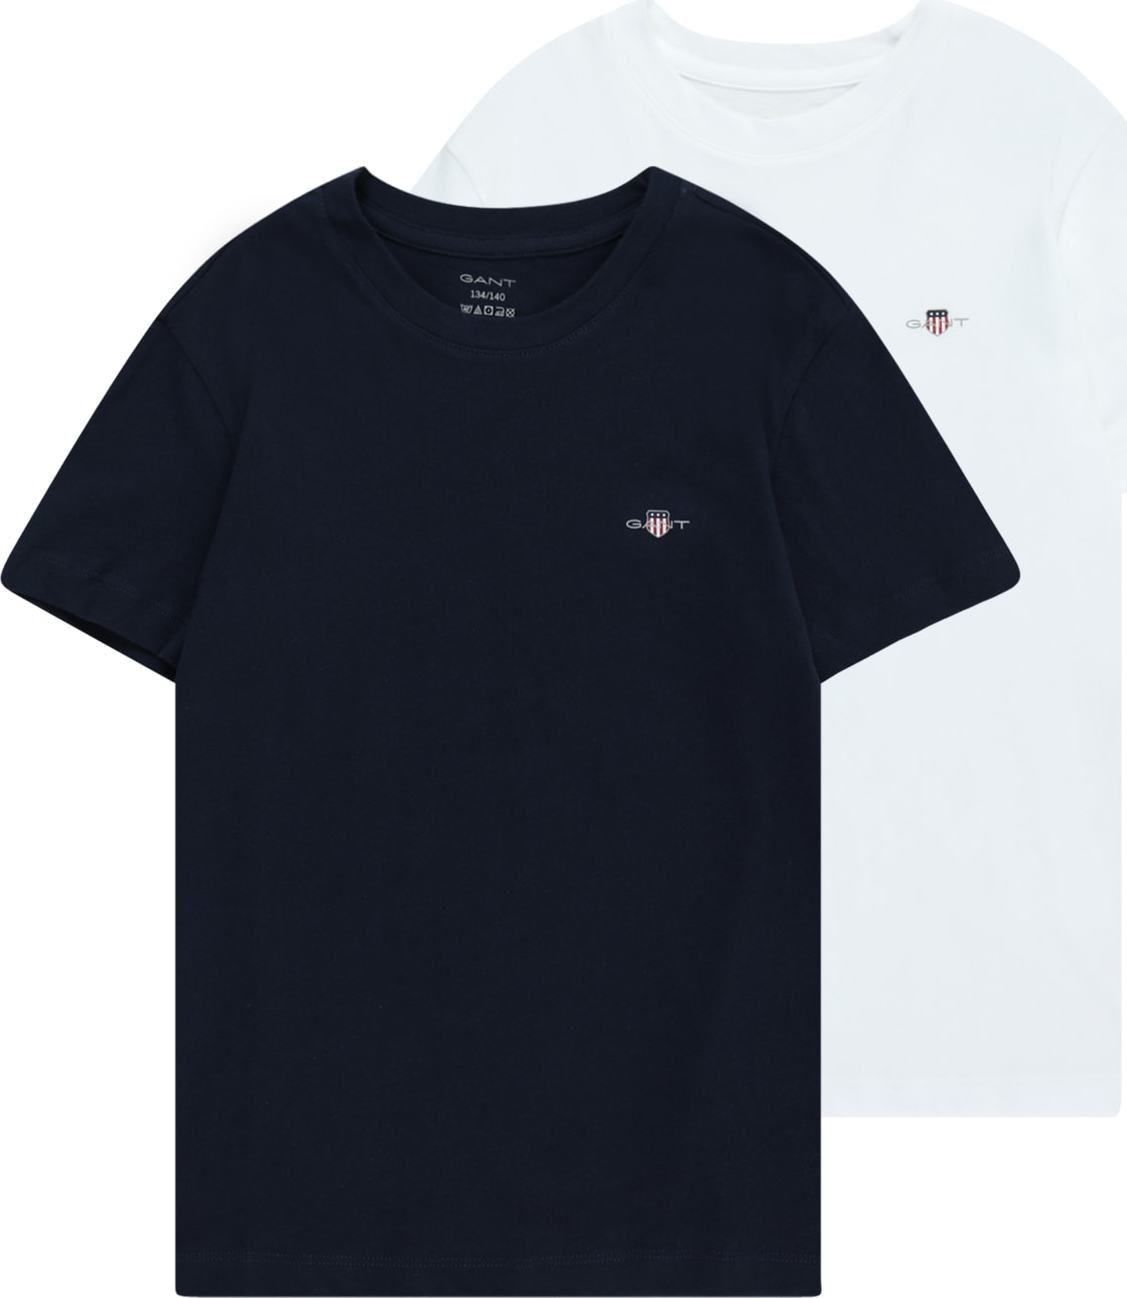 Tričko Gant námořnická modř / bílá